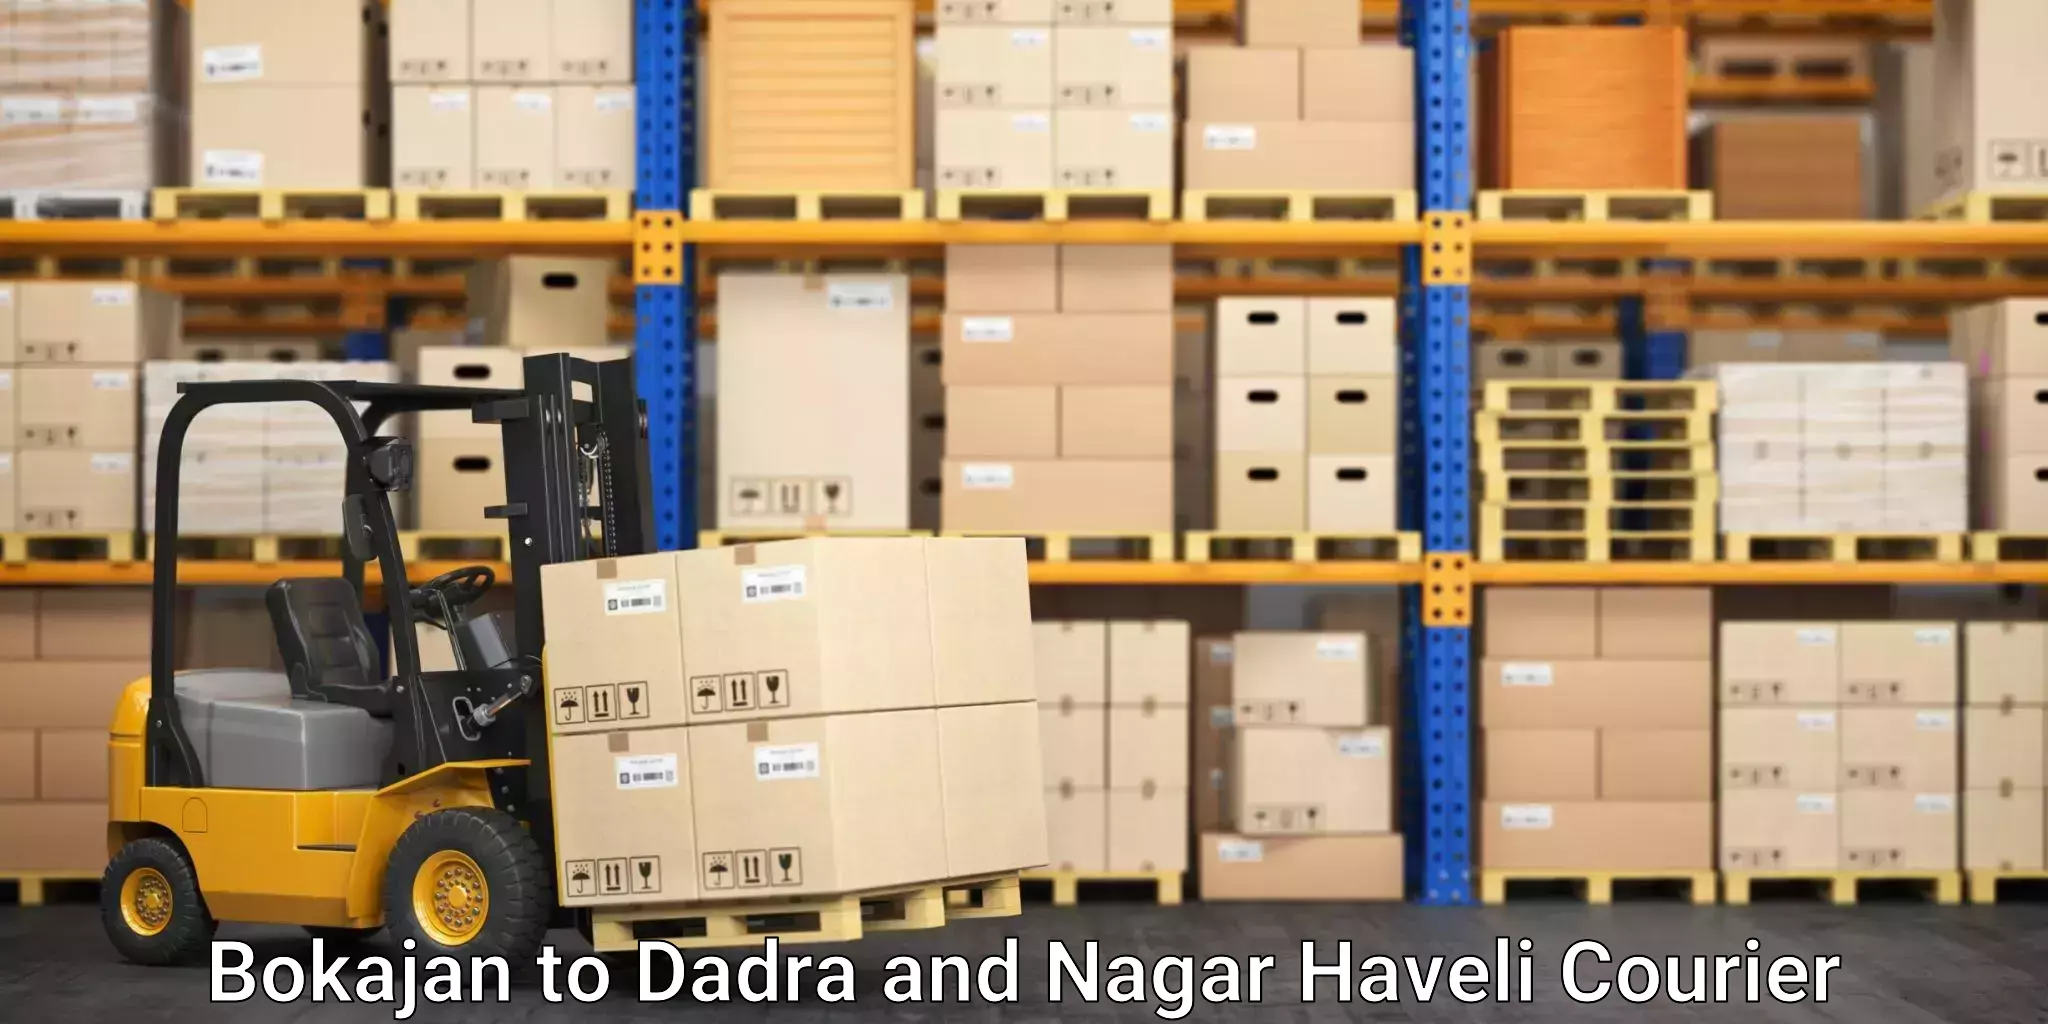 Customized shipping options in Bokajan to Dadra and Nagar Haveli